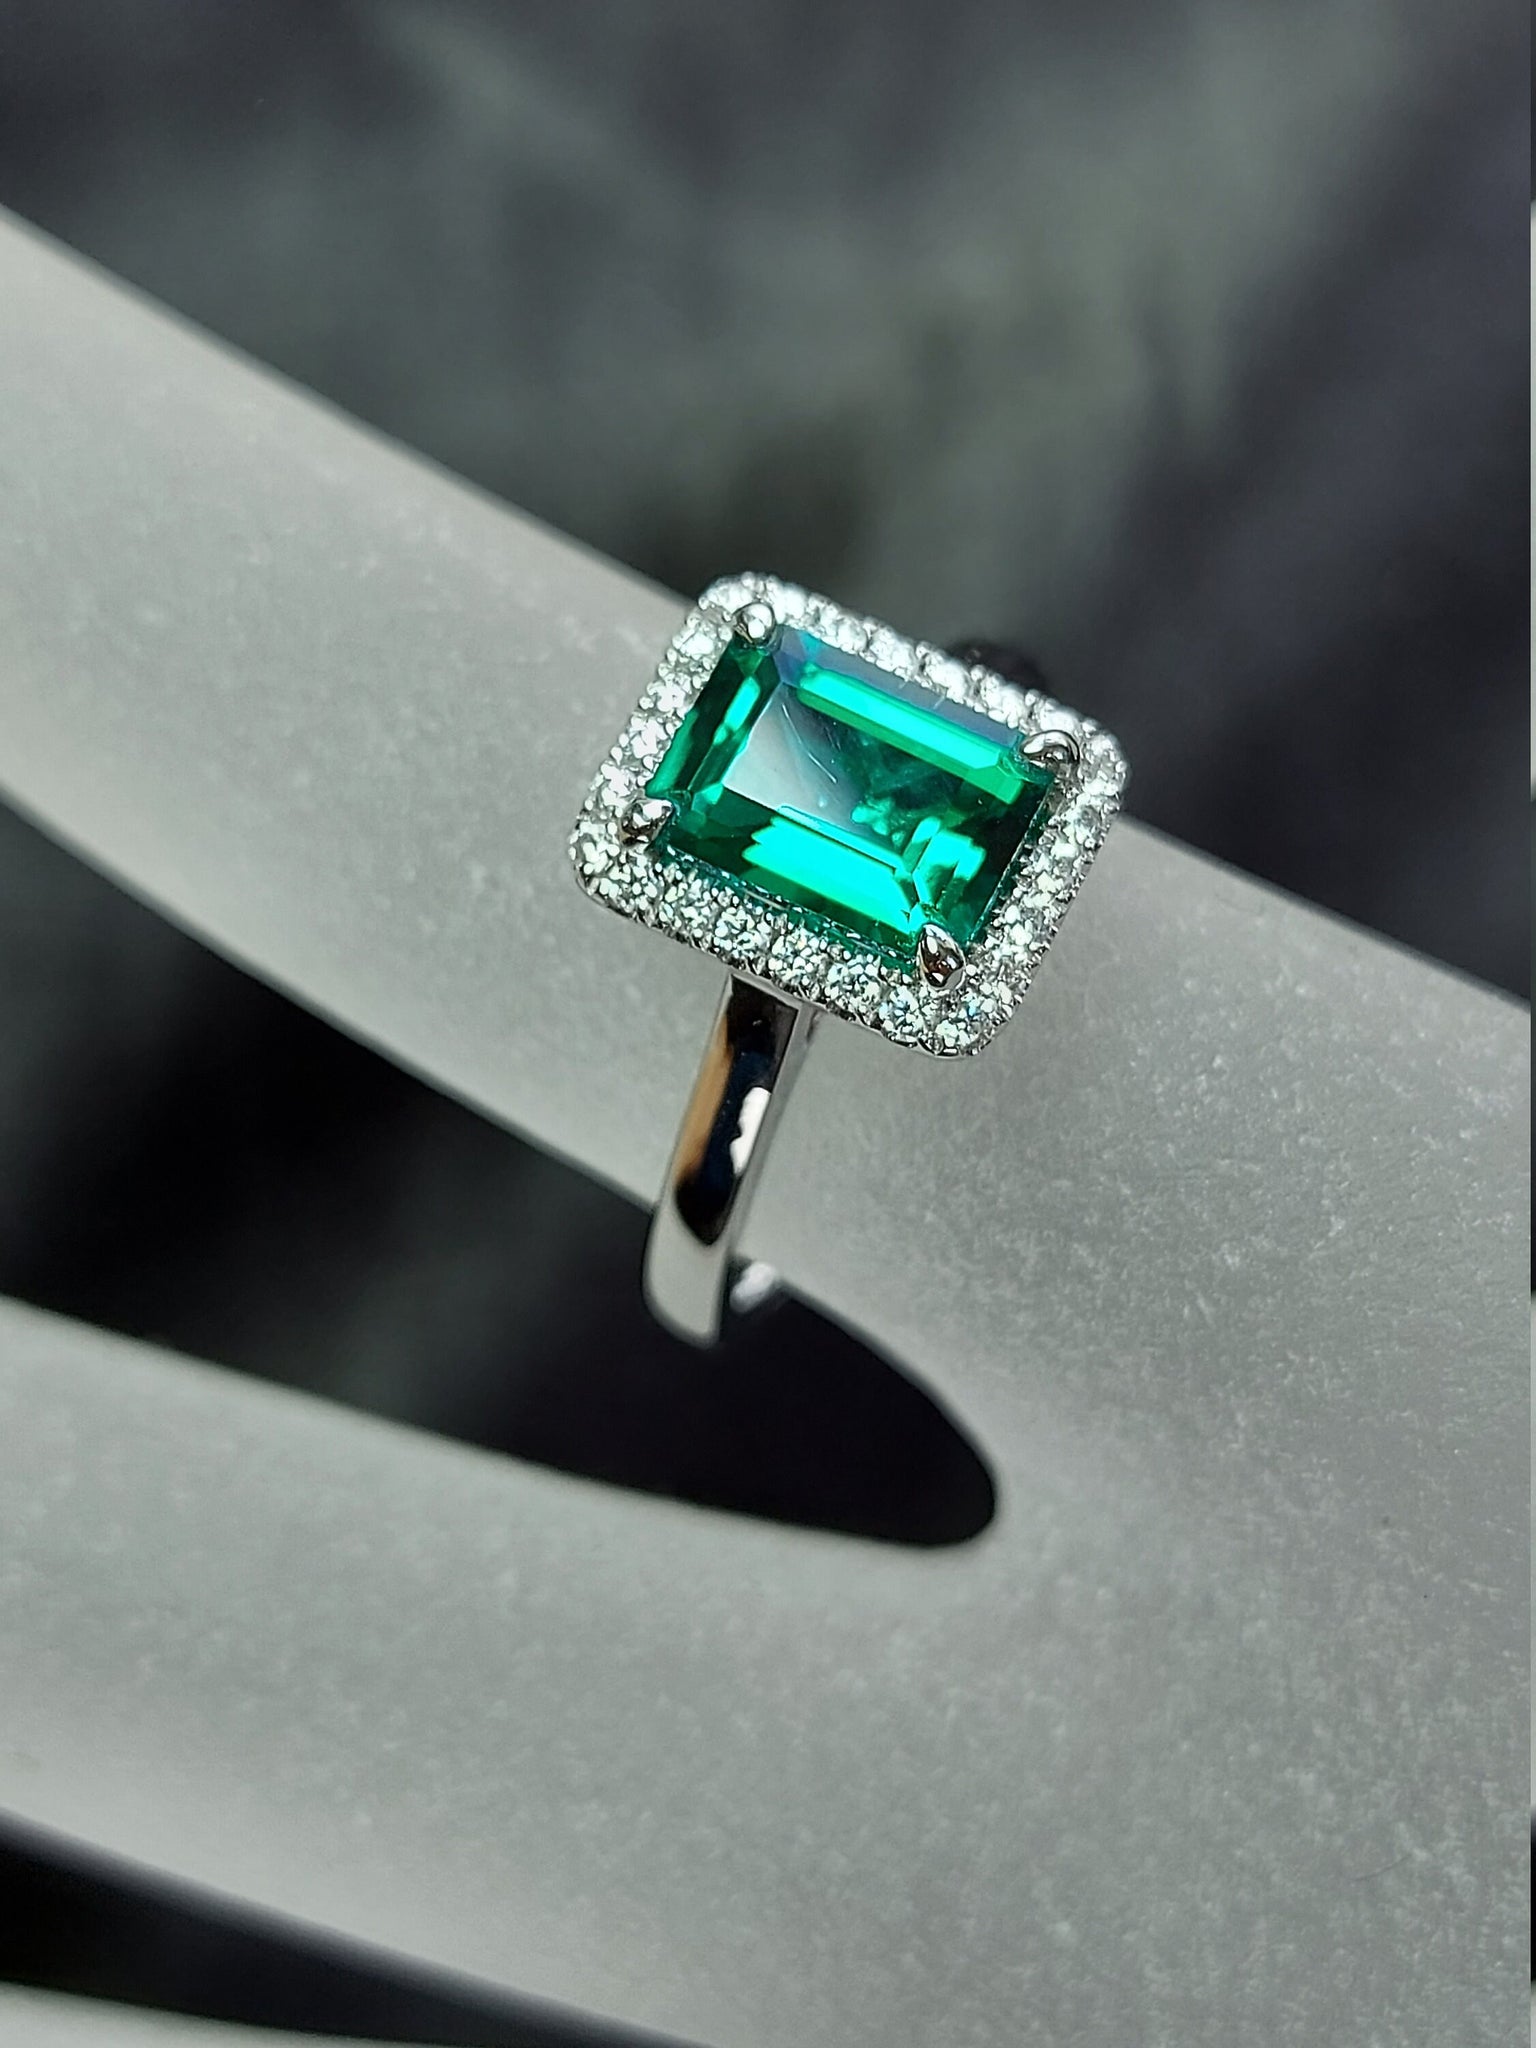 Emerald Engagement Ring,Diamond Halo Ring, 1.5 ct Emerald Cut ,Halo Diamond Wedding Ring, .20ct Diamonds, White Gold, Lola ring